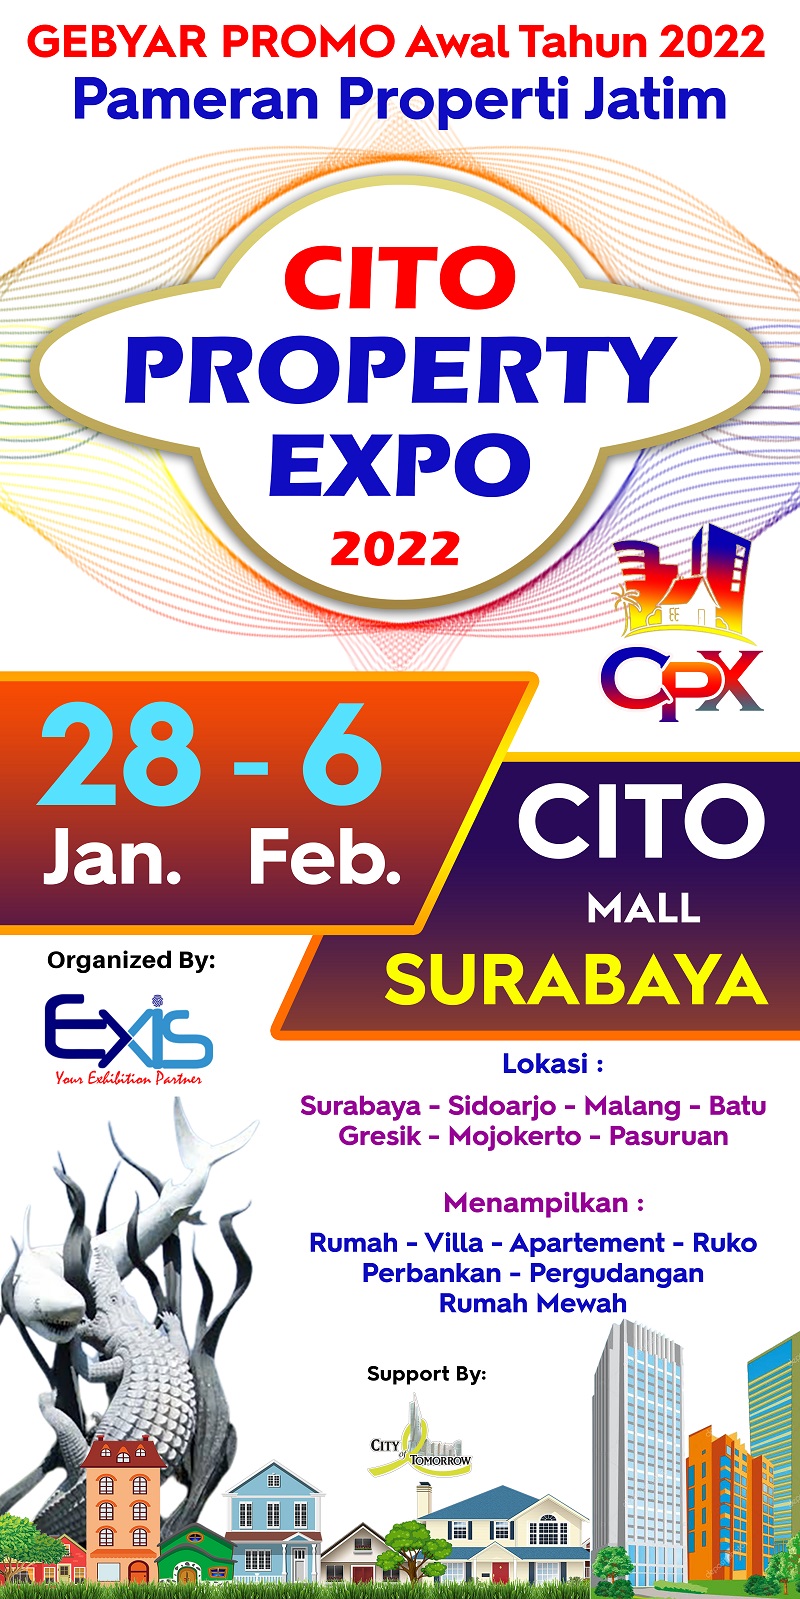 Pameran Properti Jatim - Cito Property Expo 2022, Pameran Properti Surabaya, Property Expo 2022